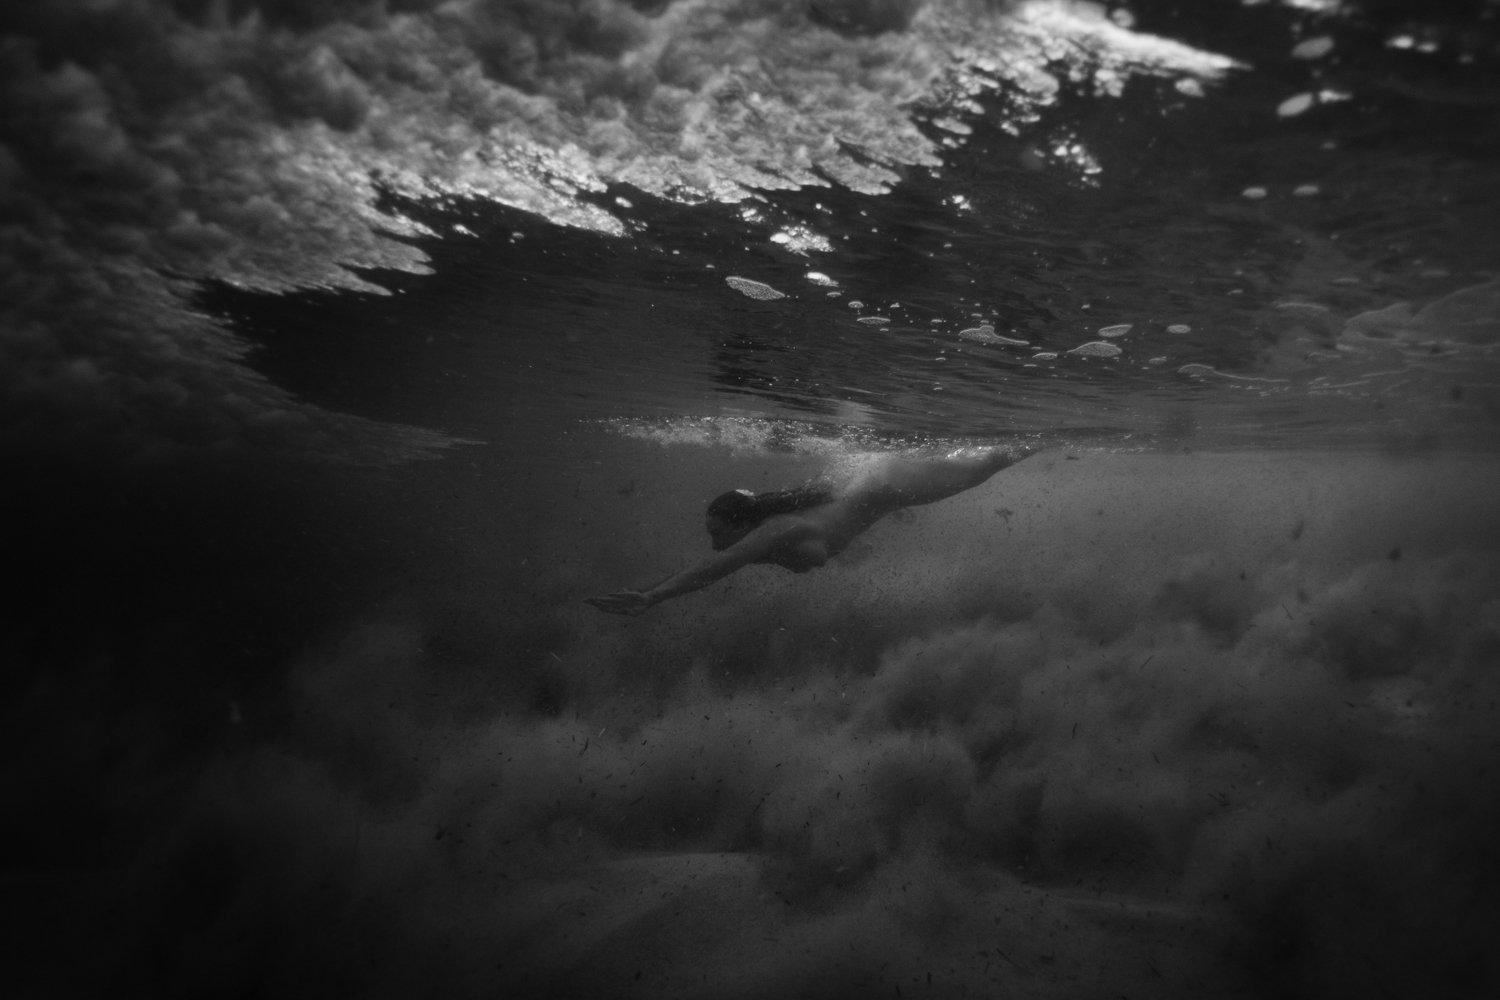 underwater corse corsica sea mediterranean island france french photographer photographe ajaccio Krista Espino Capo di feno wave nude nue femme woman fine art photography-13.jpg